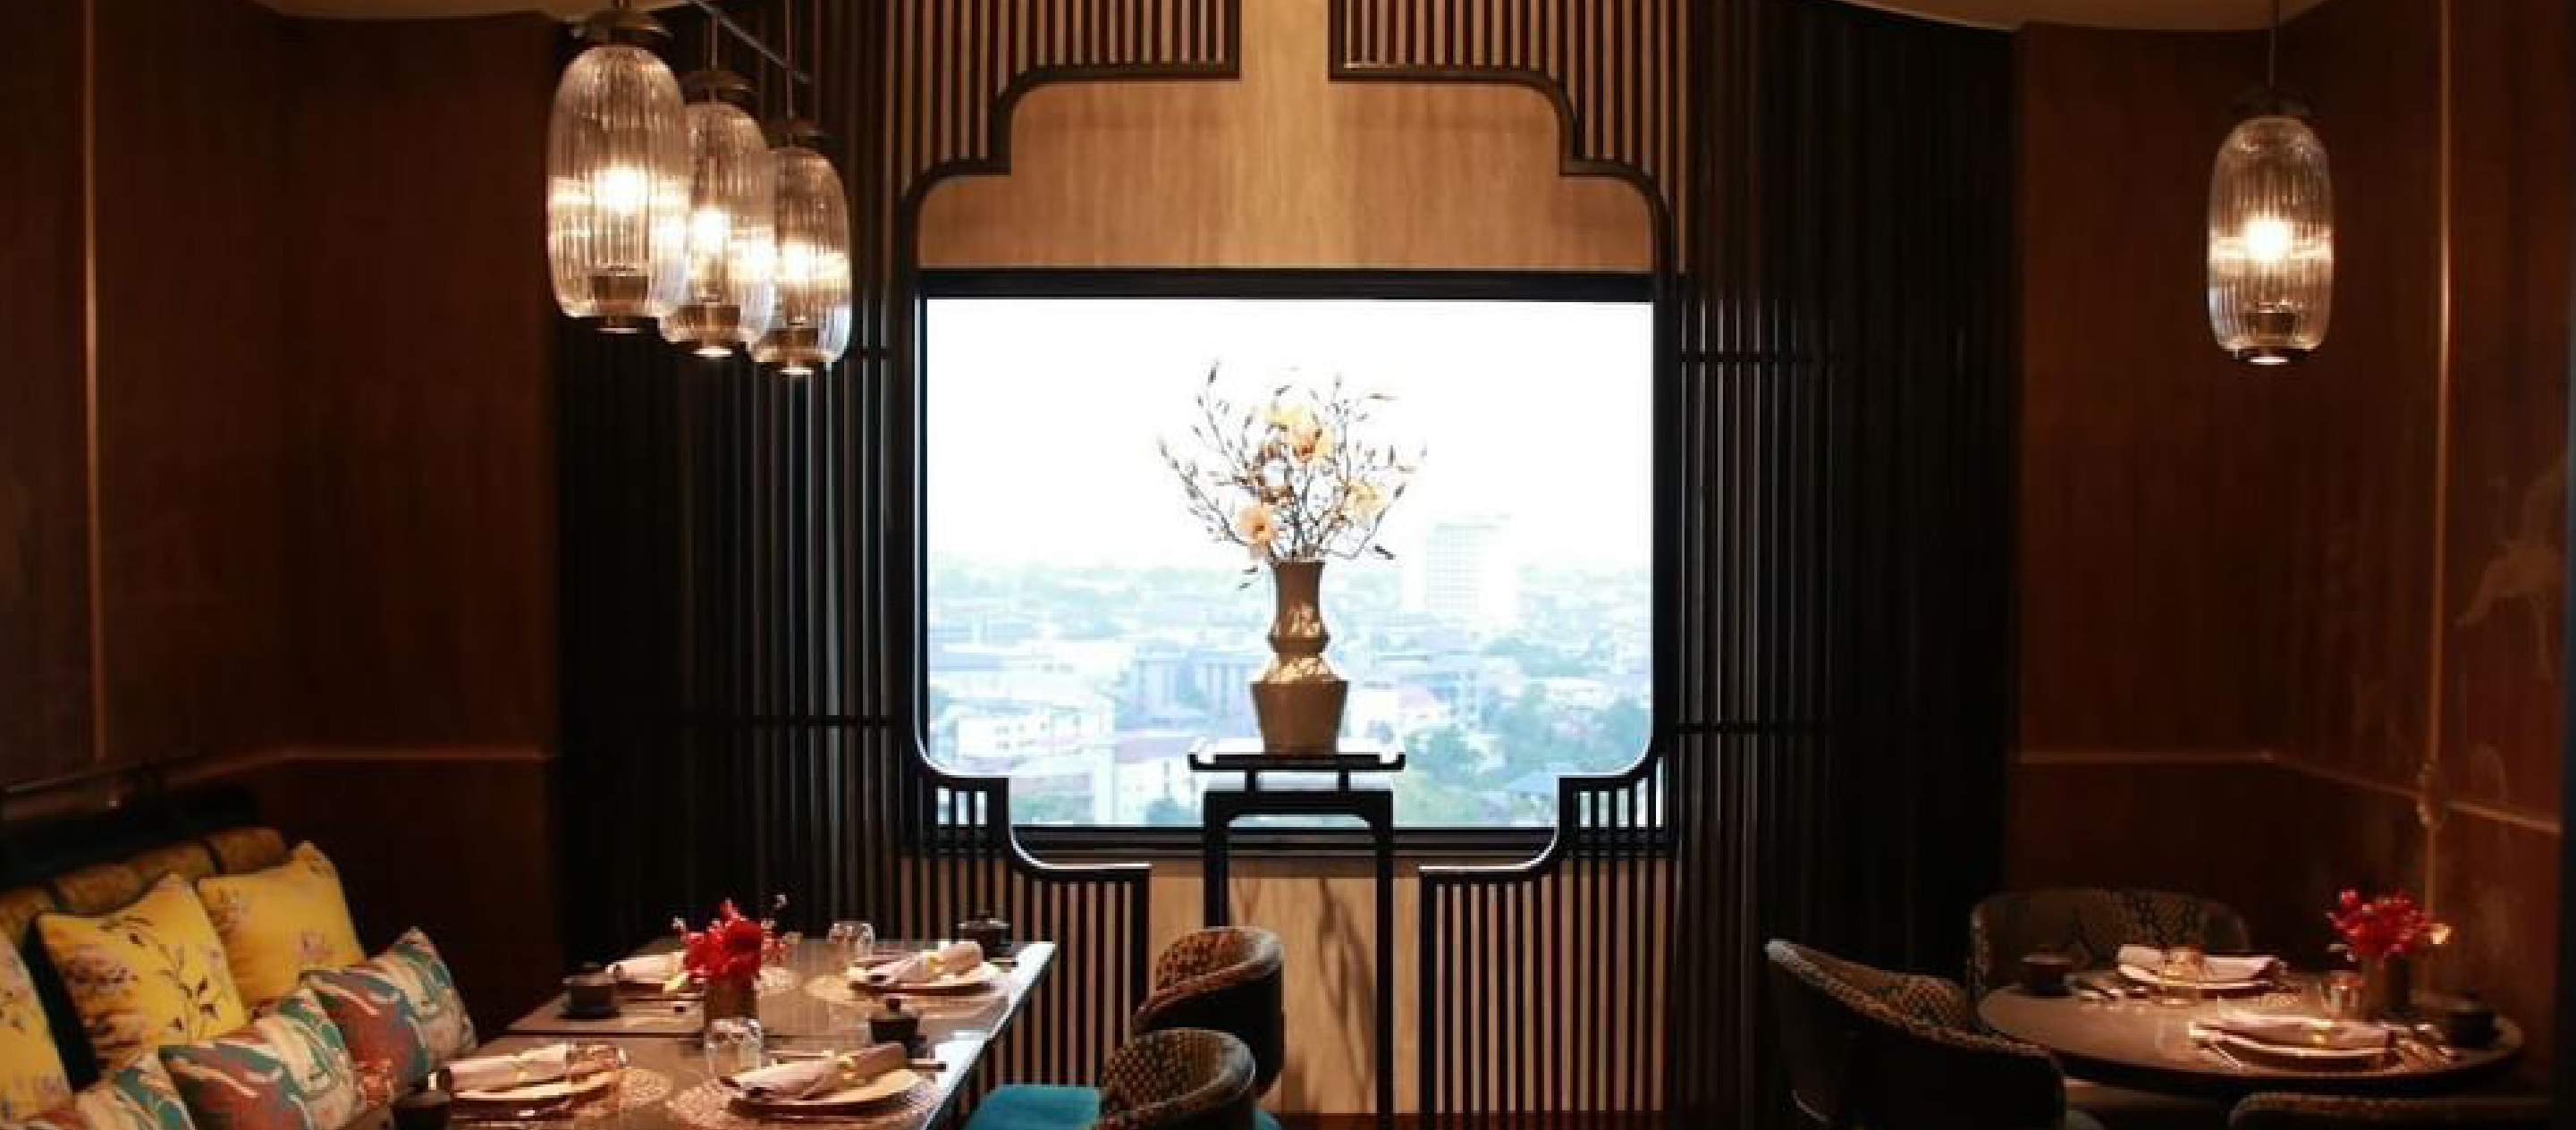 Hong’s Chinese Restaurant &#038; Sky Bar ห้องอาหารและบาร์สไตล์จีนสุดหรูแห่งแรกในเชียงใหม่ ที่มีดอยสุเทพเป็นฉากหลัง